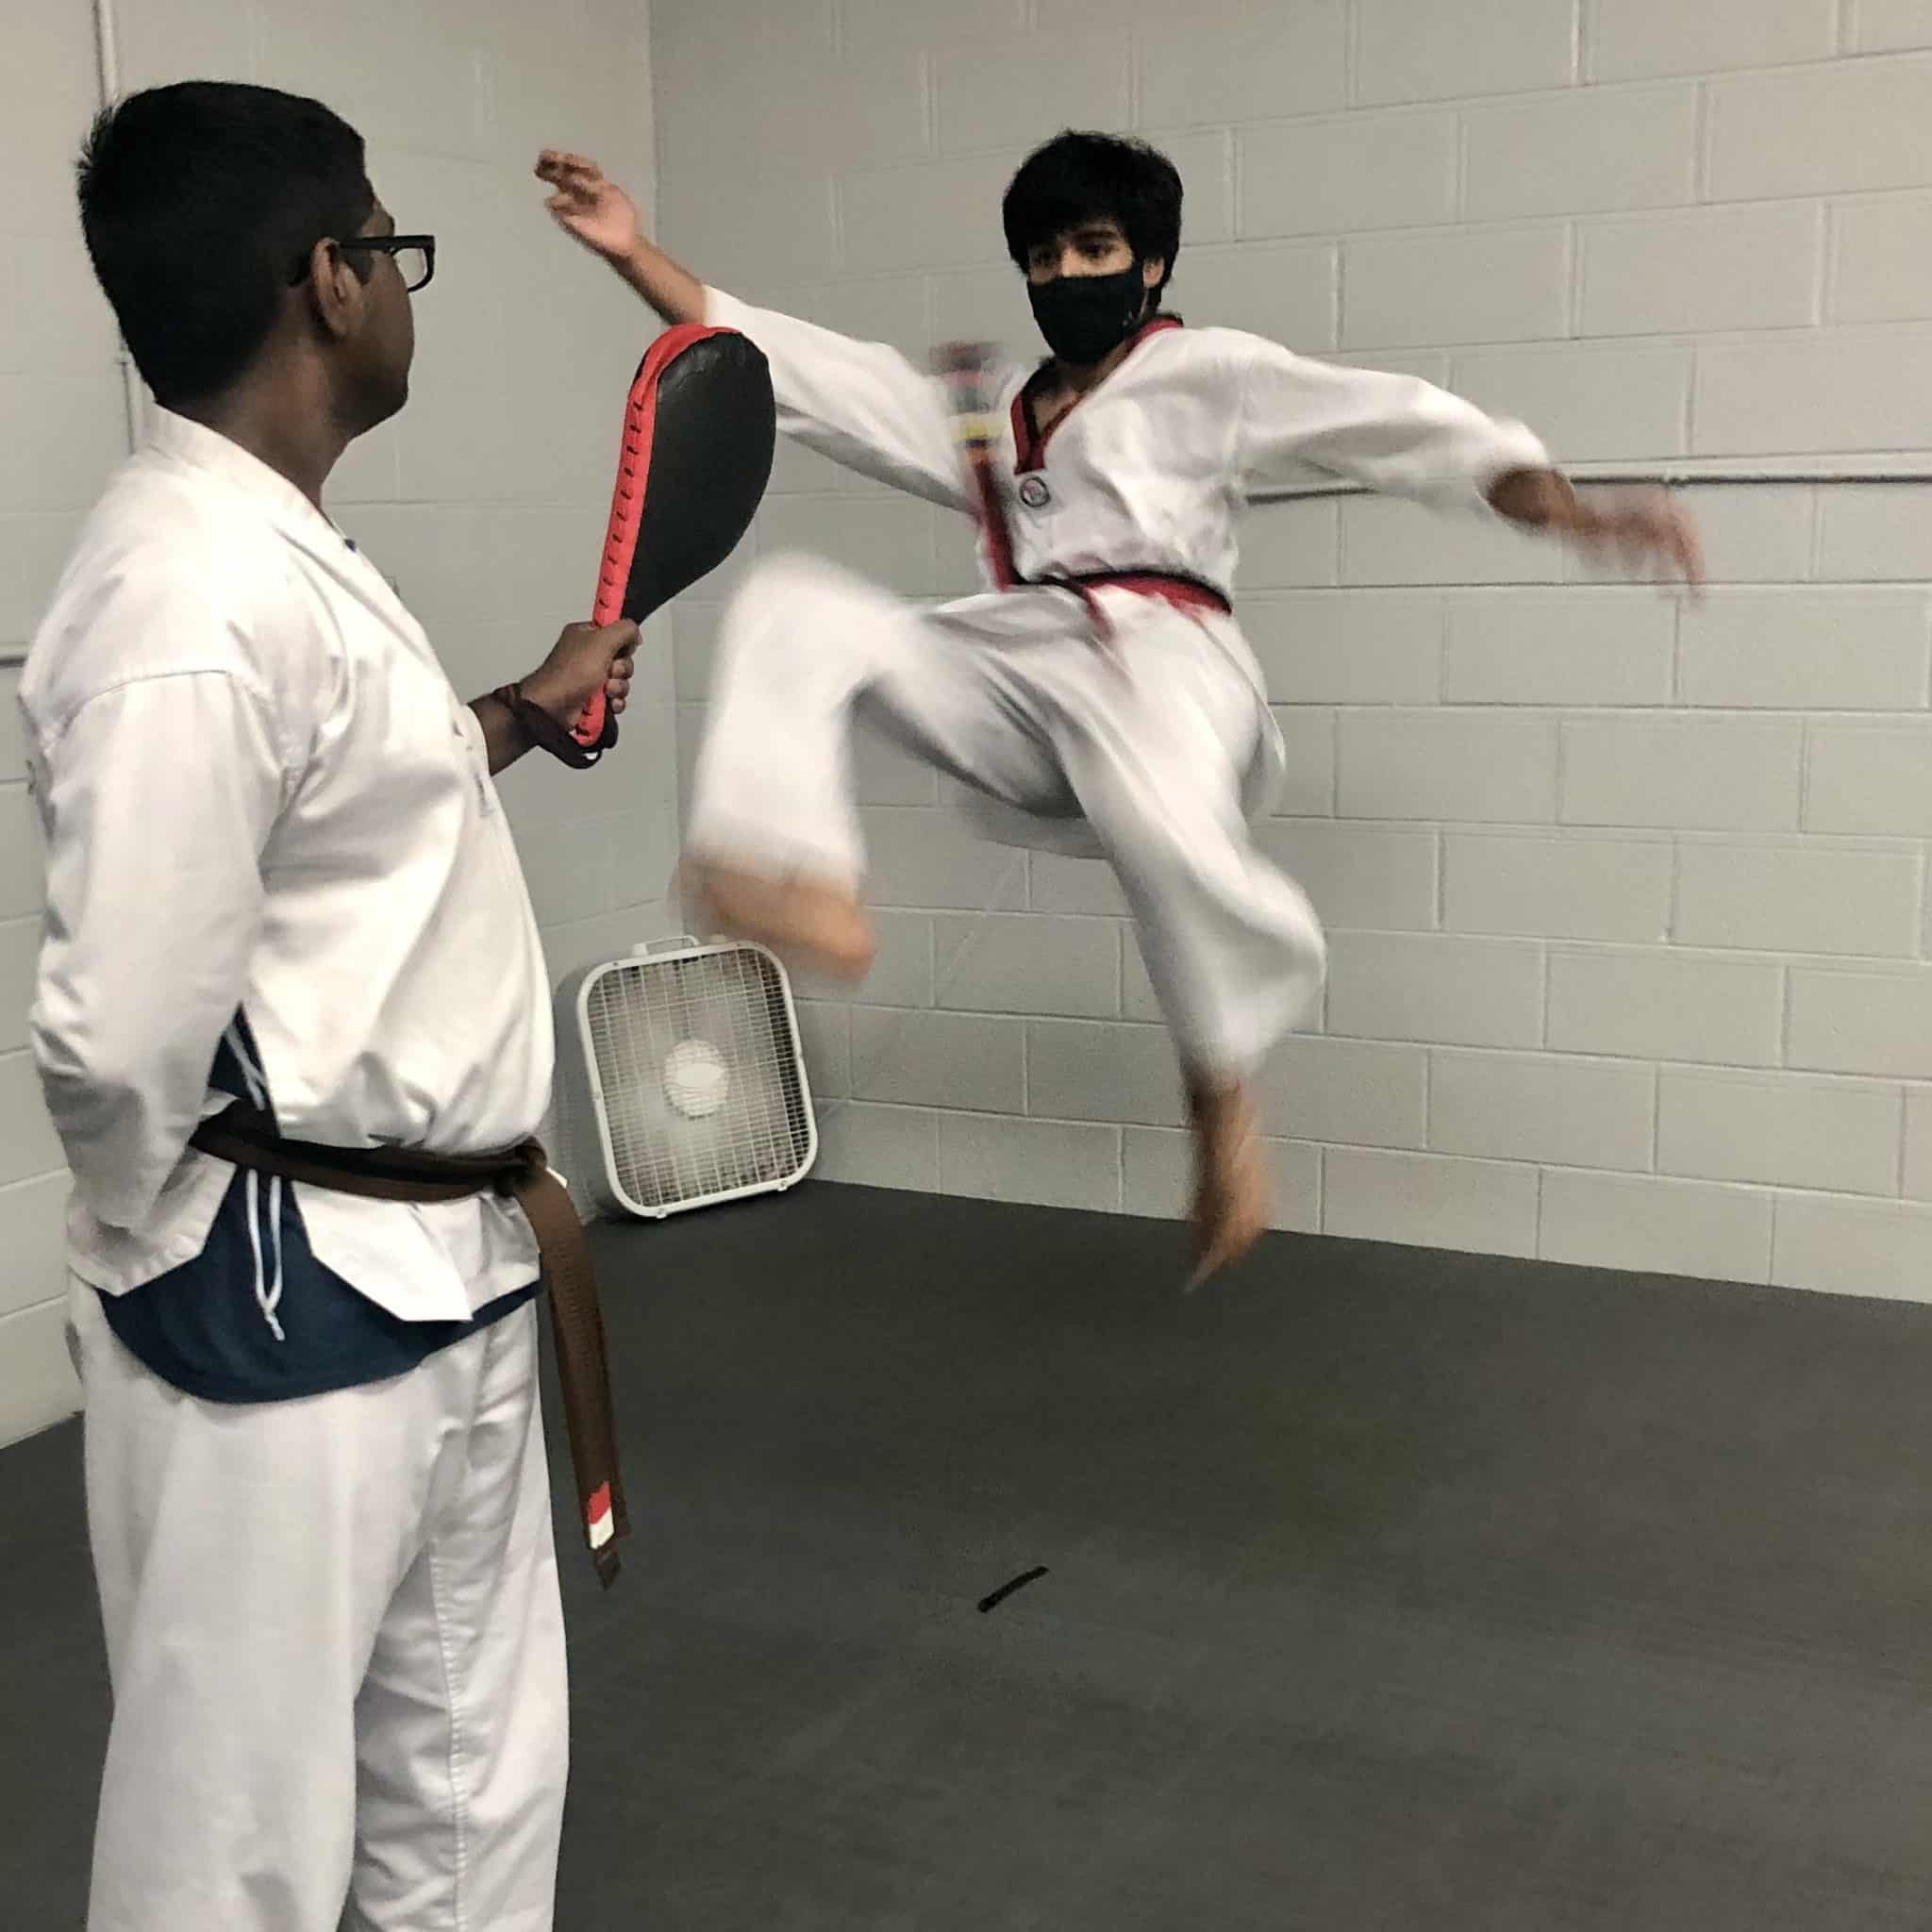 Teen boys in white uniforms practice Taekwondo kicks